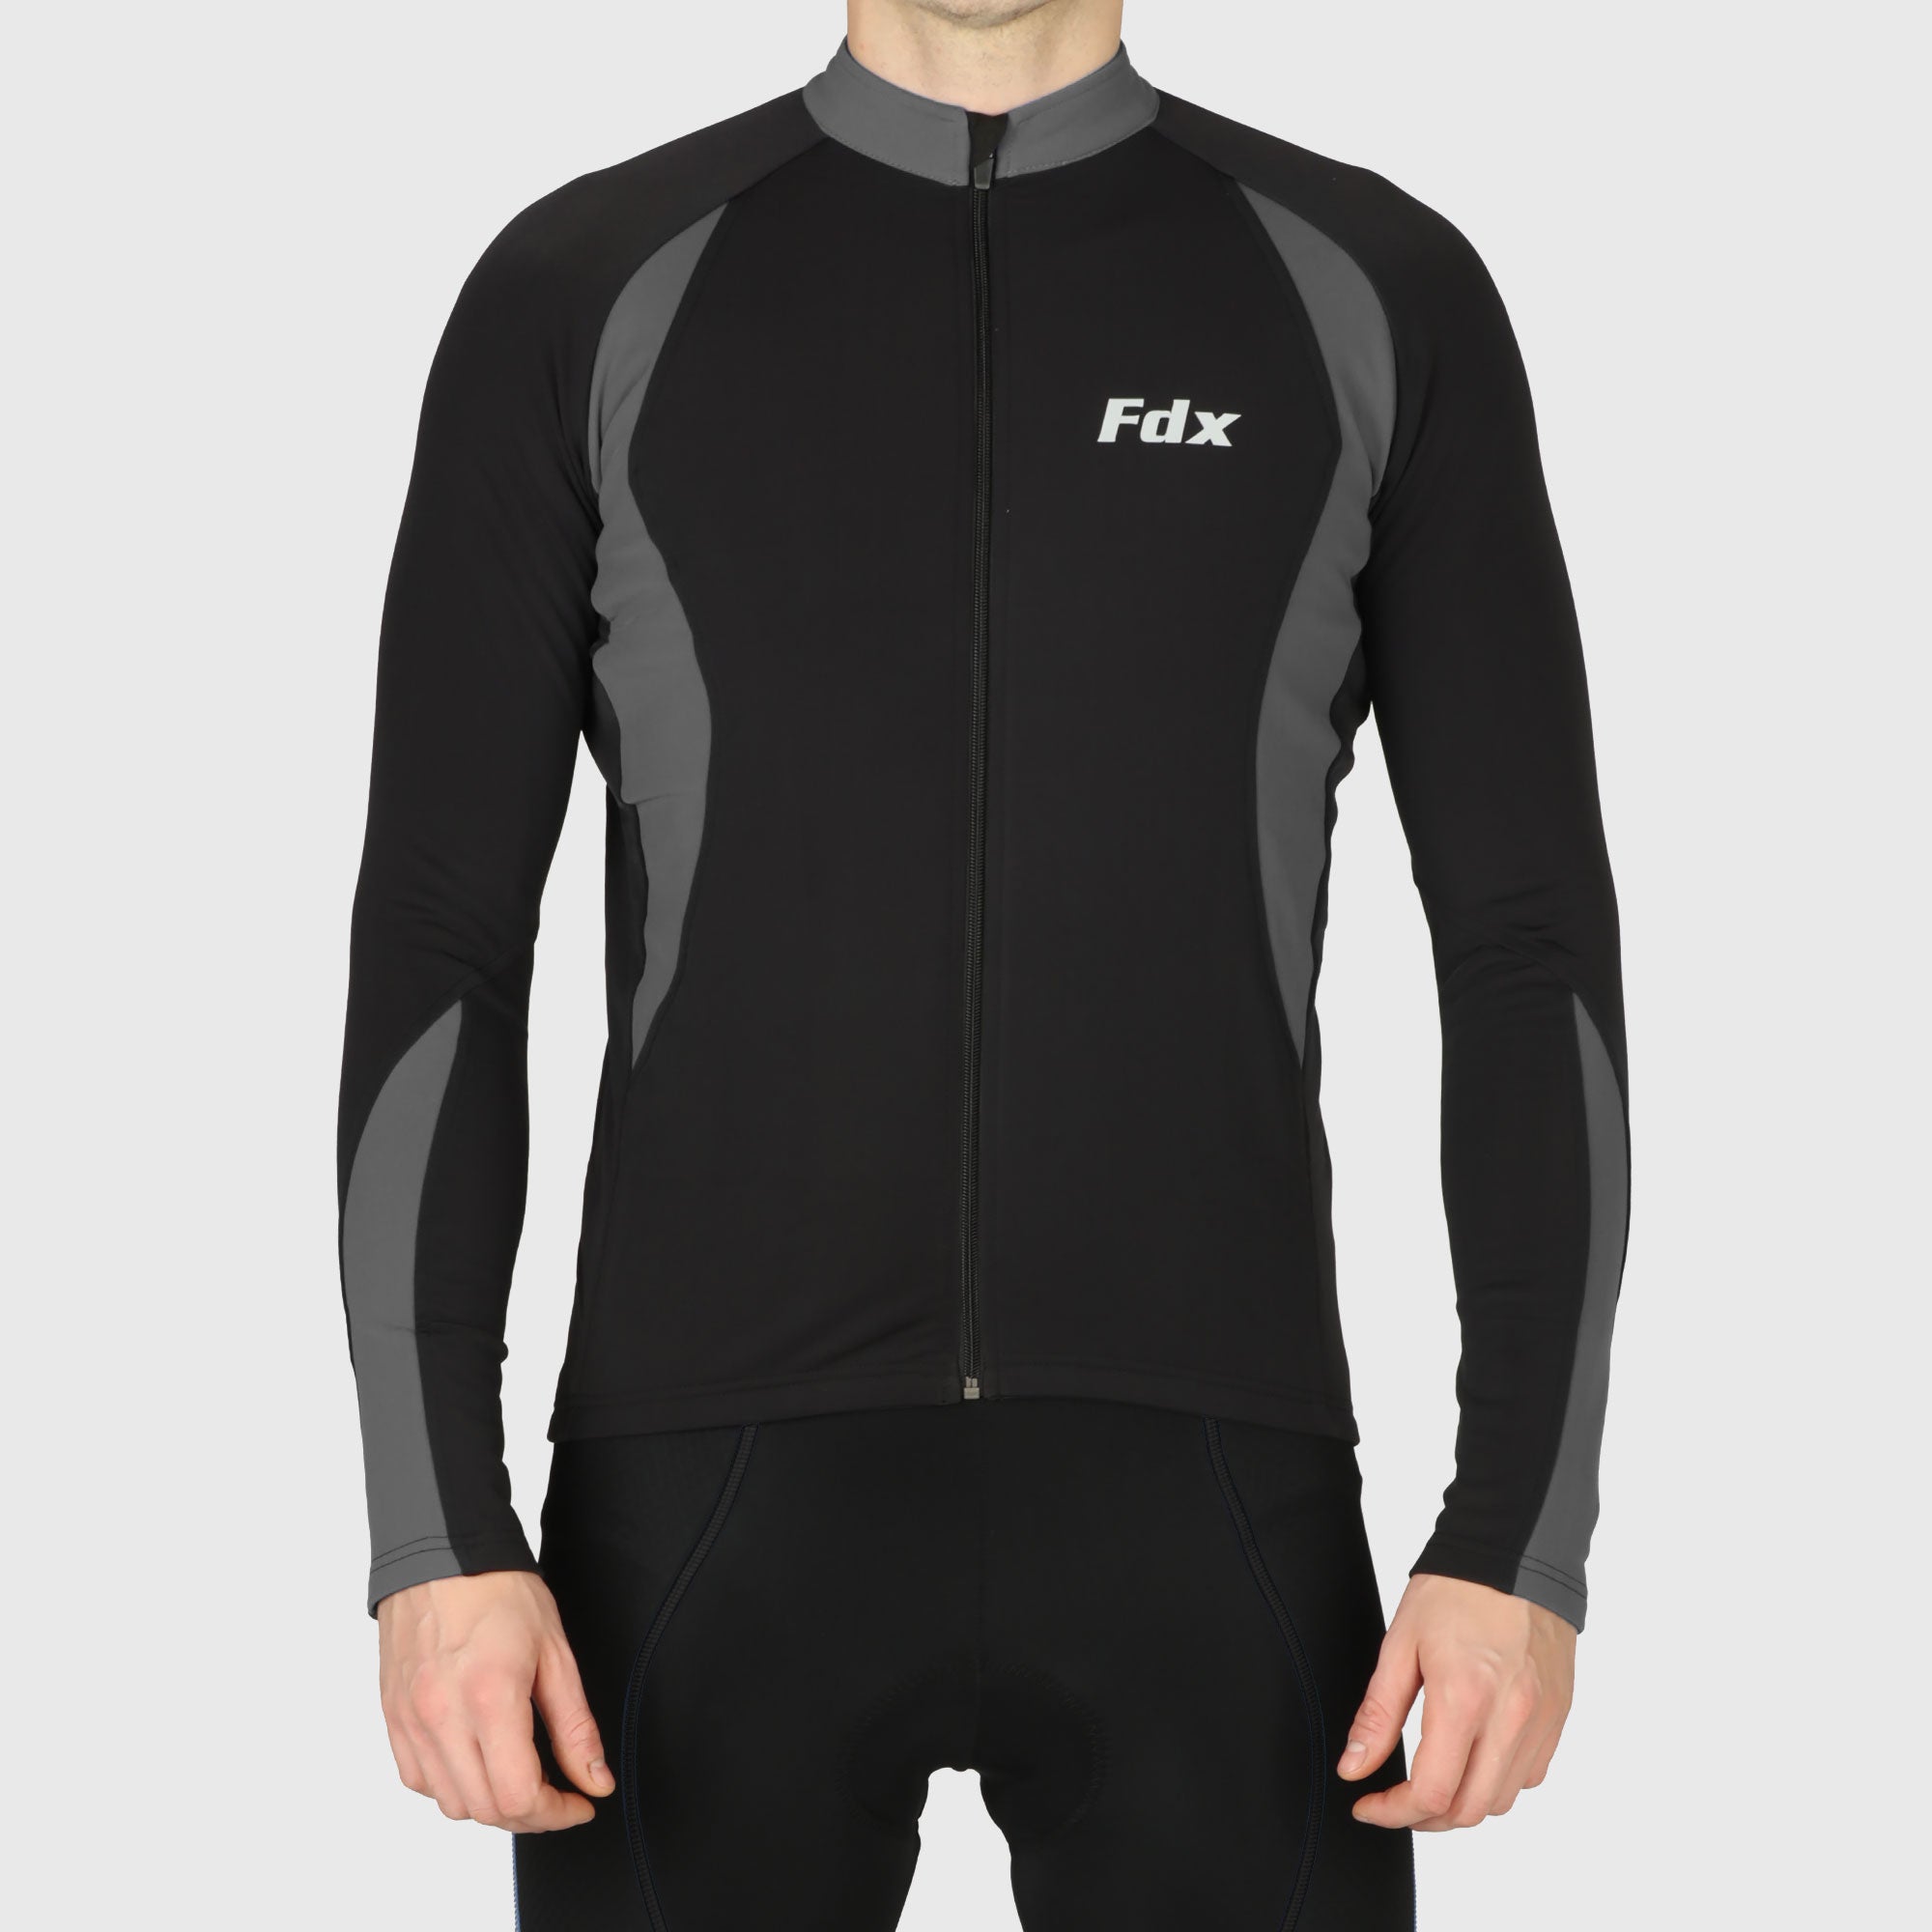 Fdx Mens Black & Grey Long Sleeve Cycling Jersey for Winter Roubaix Thermal Fleece Road Bike Wear Top Full Zipper, Pockets & Hi-viz Reflectors - Viper